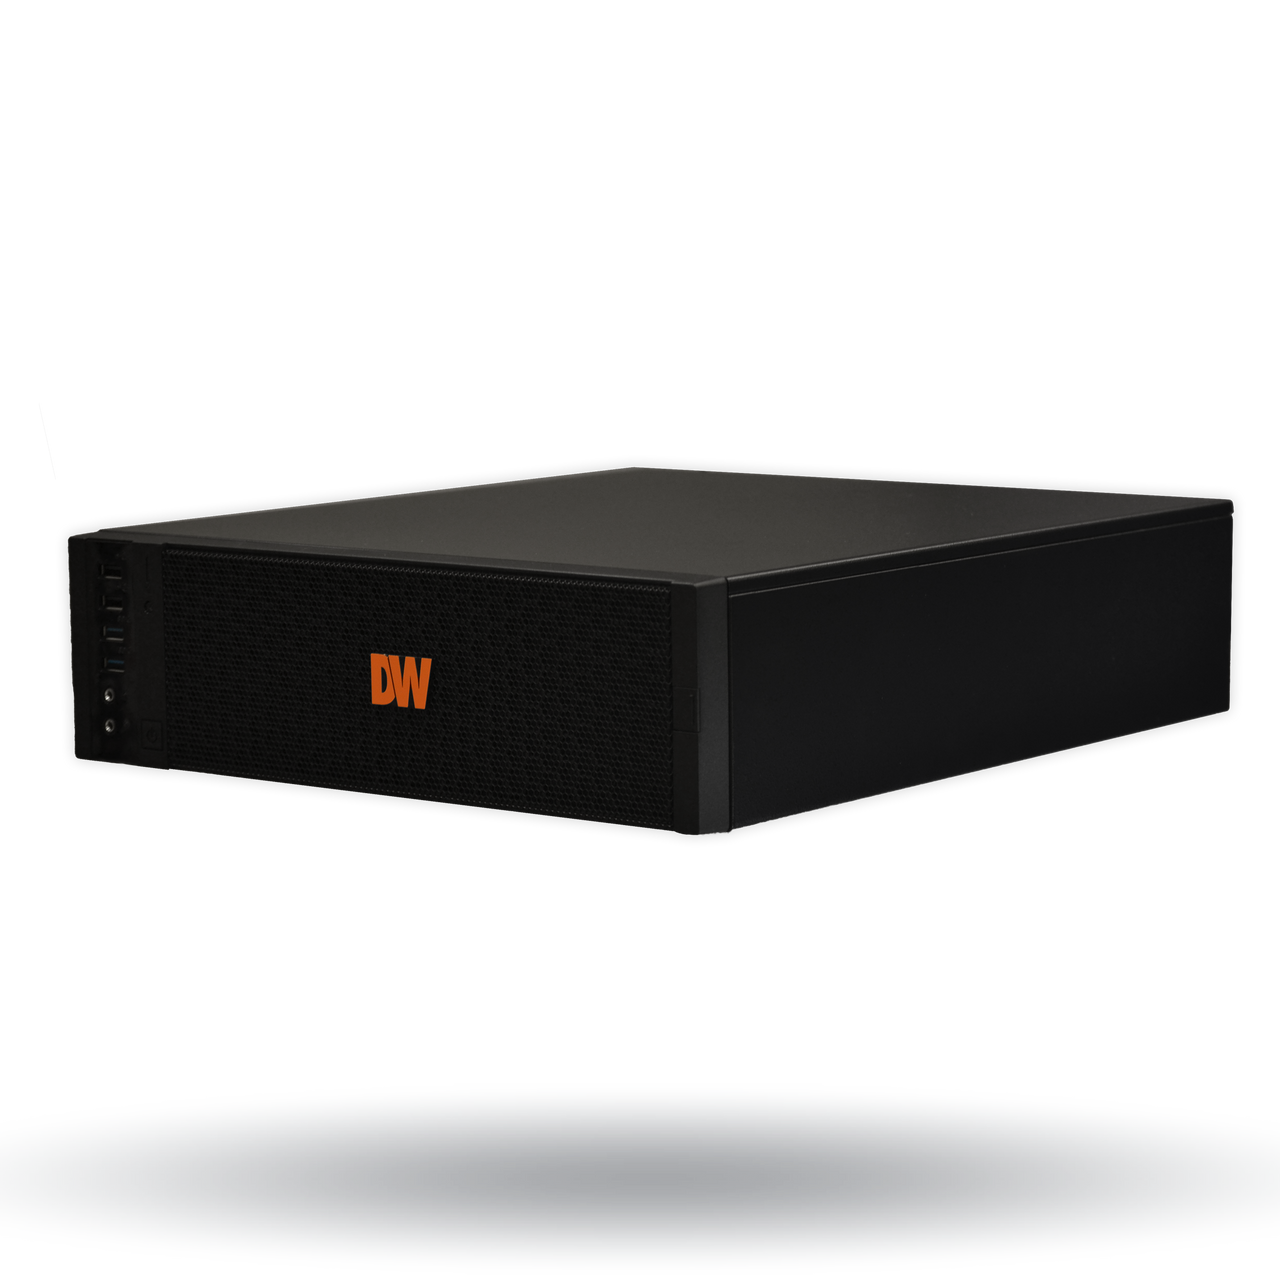 Digital Watchdog DW-BJDX5120T-LX 360Mbps Desktop Video Server, i5 CPU, Linux Ubuntu OS, 20TB HDD, NDAA Compliant